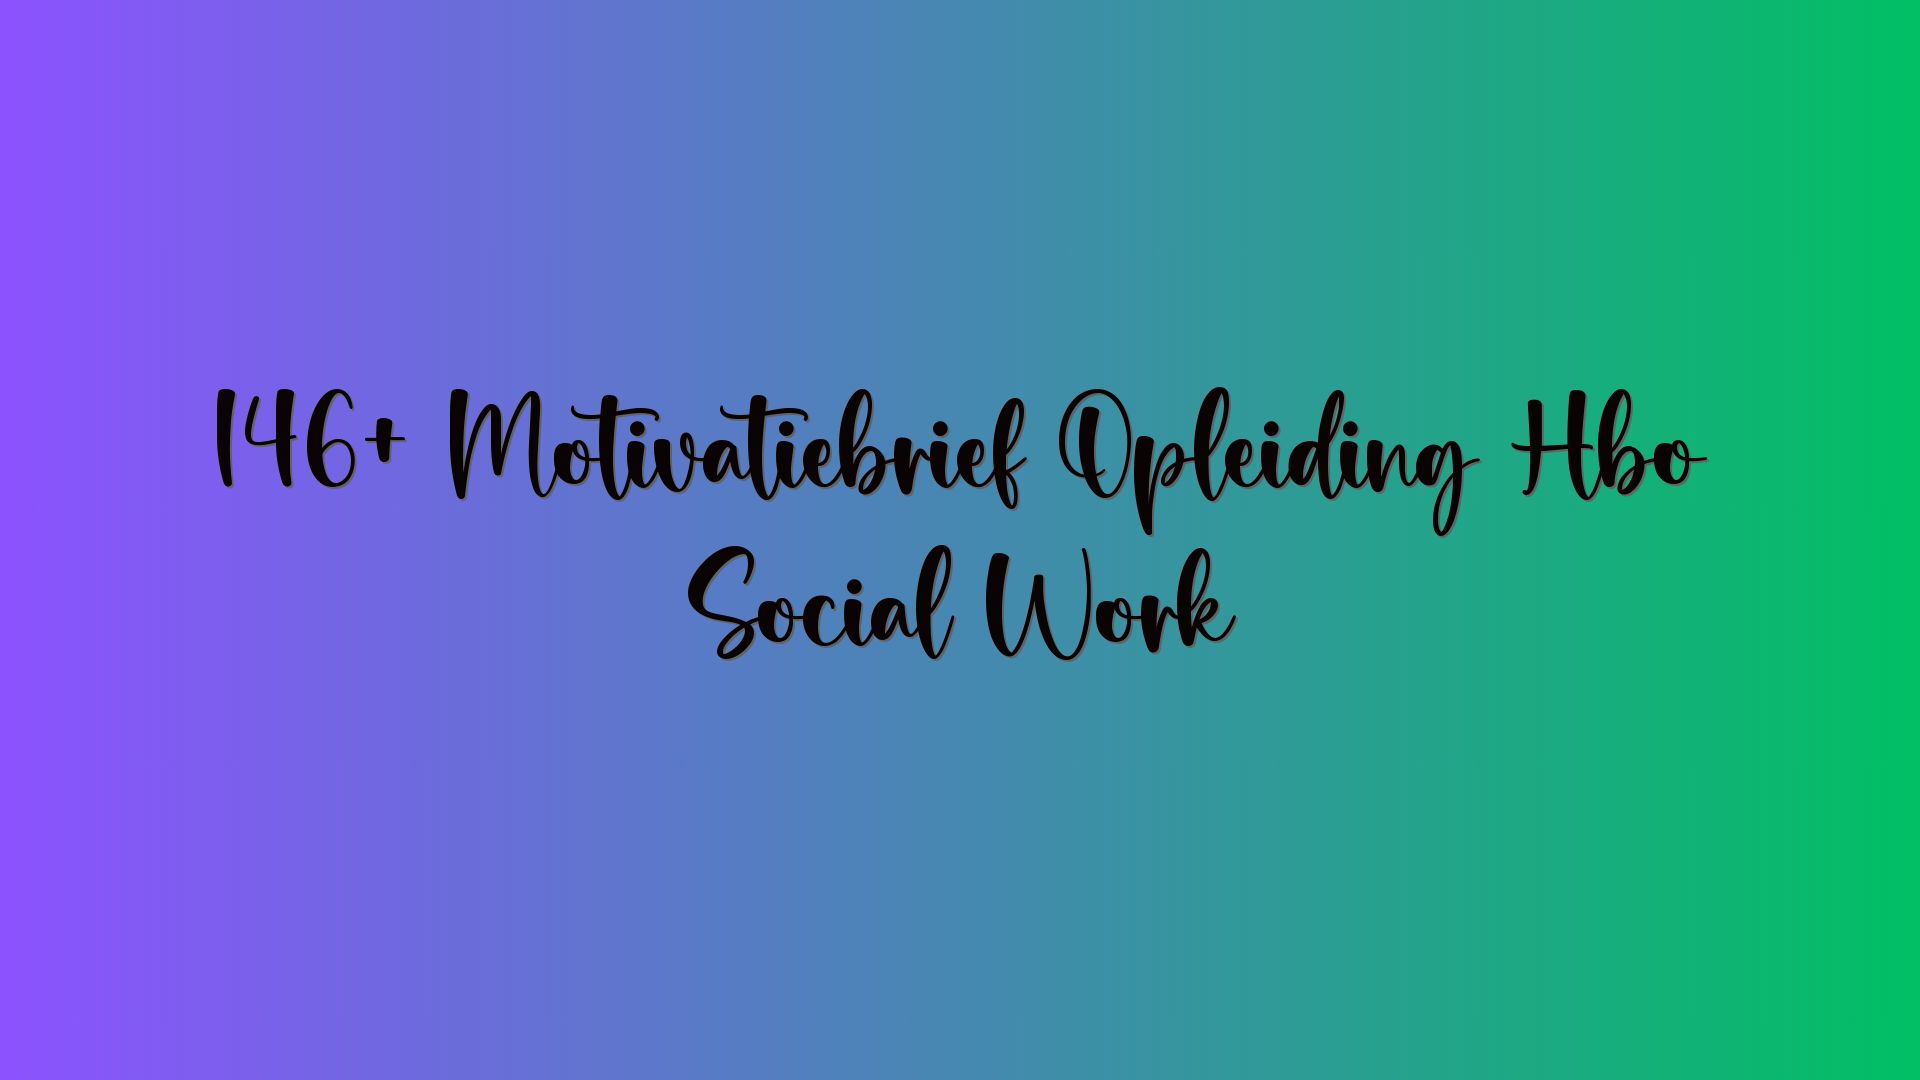 146+ Motivatiebrief Opleiding Hbo Social Work